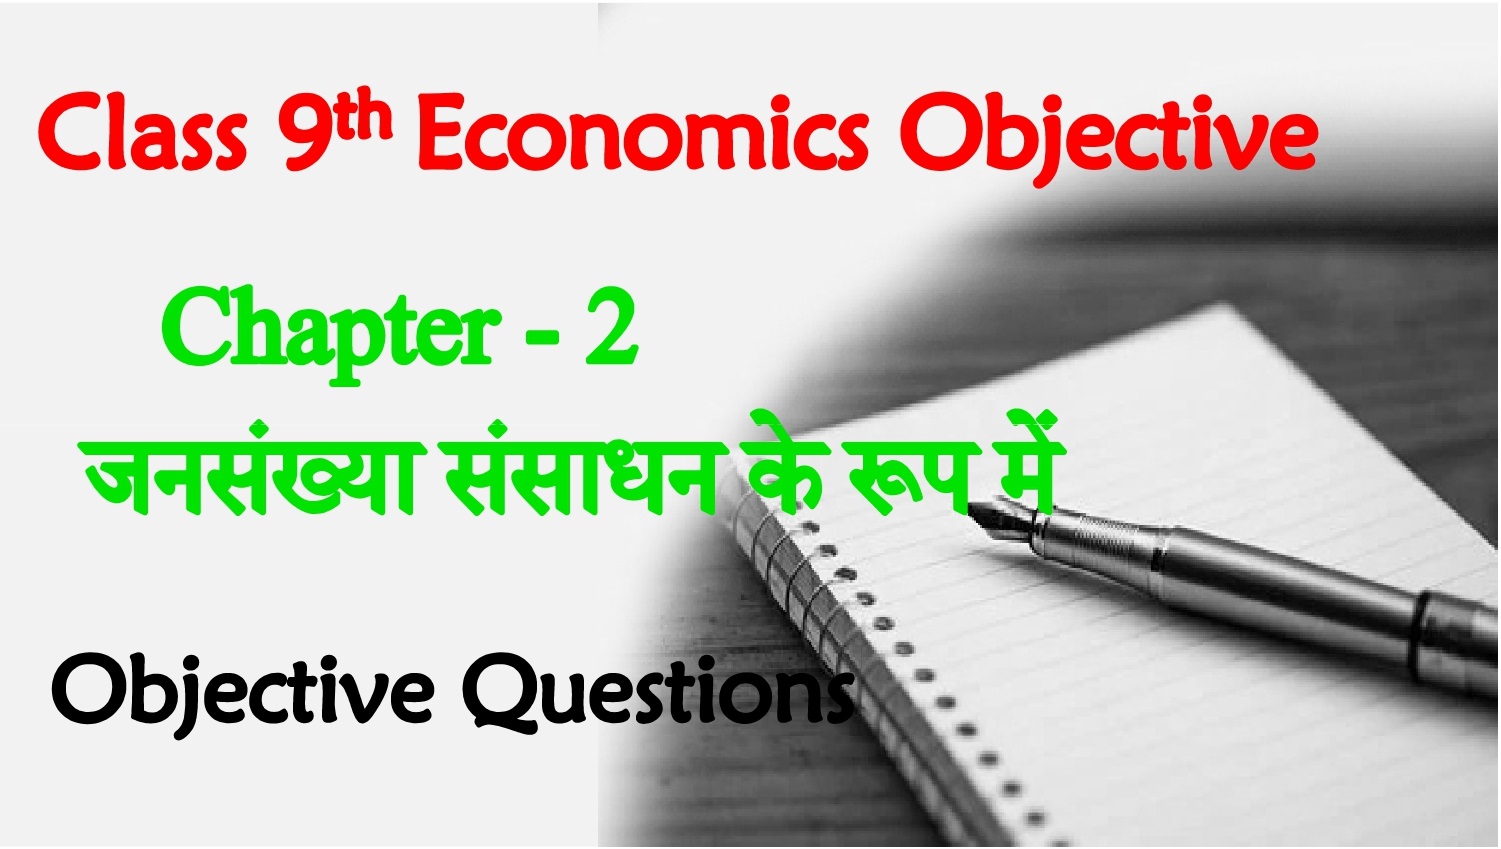 Sansadhan Ke Rup Me Log Class 9th Objective Questions